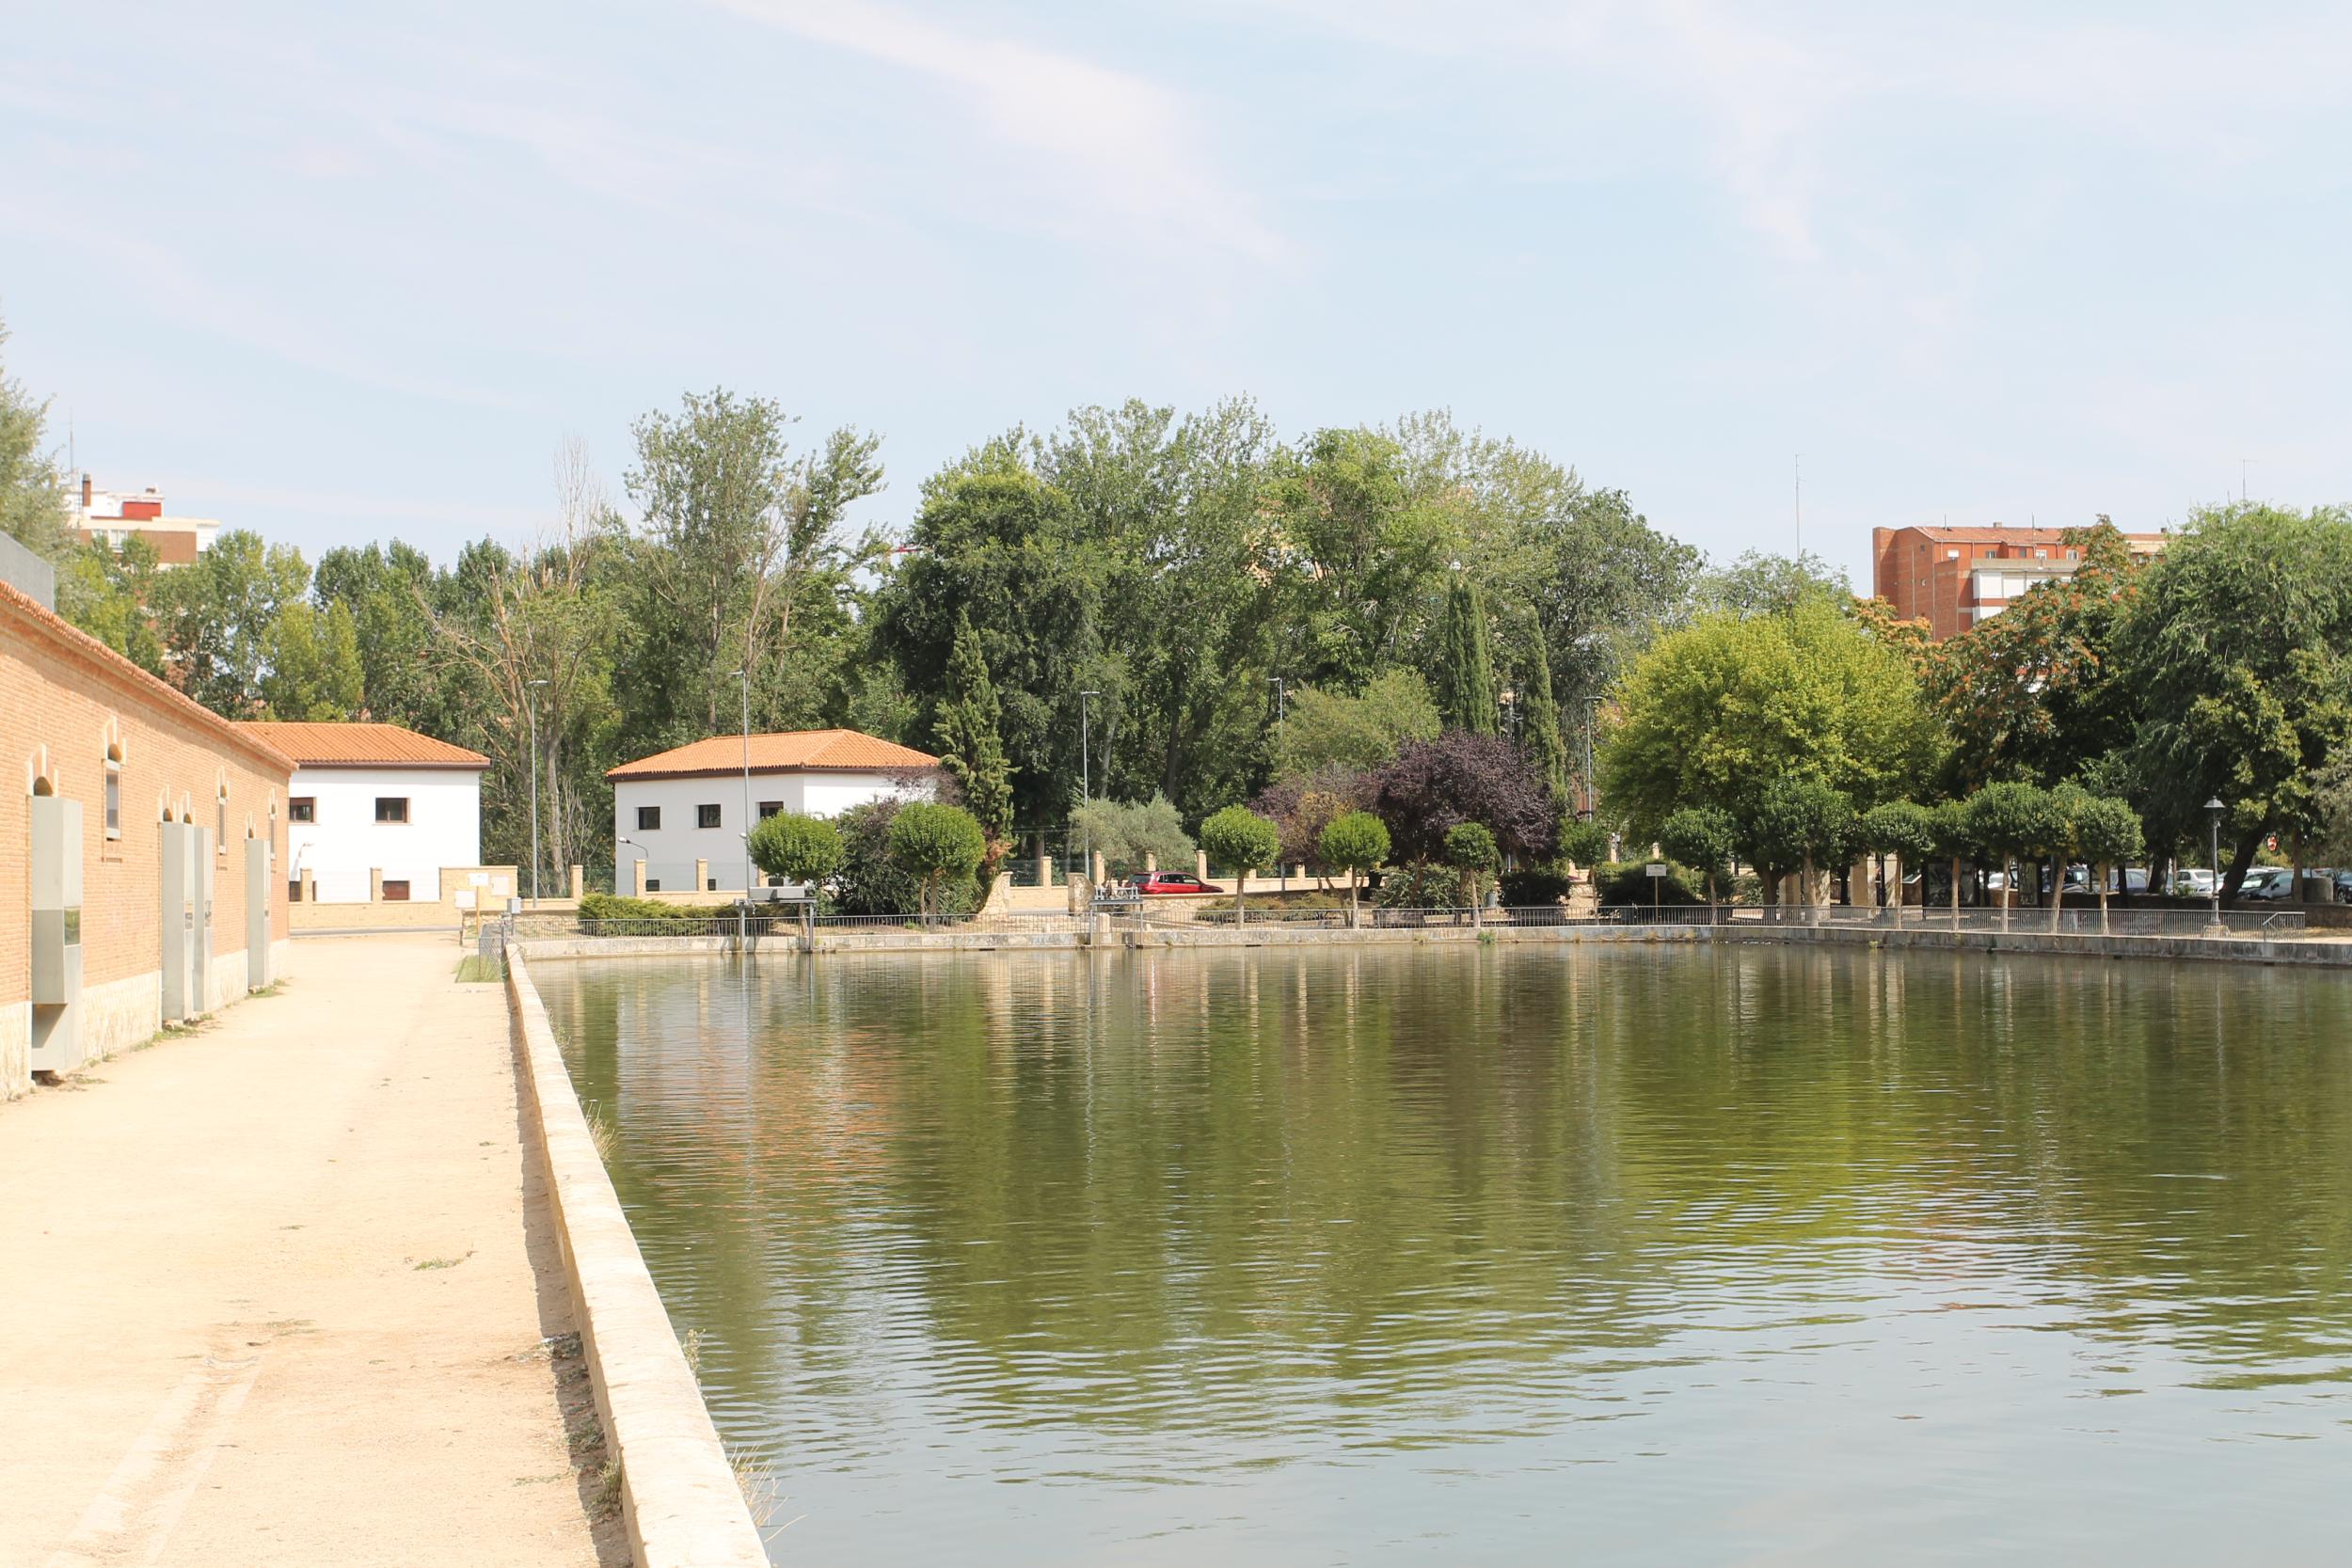 Darsena de Palencia, Canal de Castilla